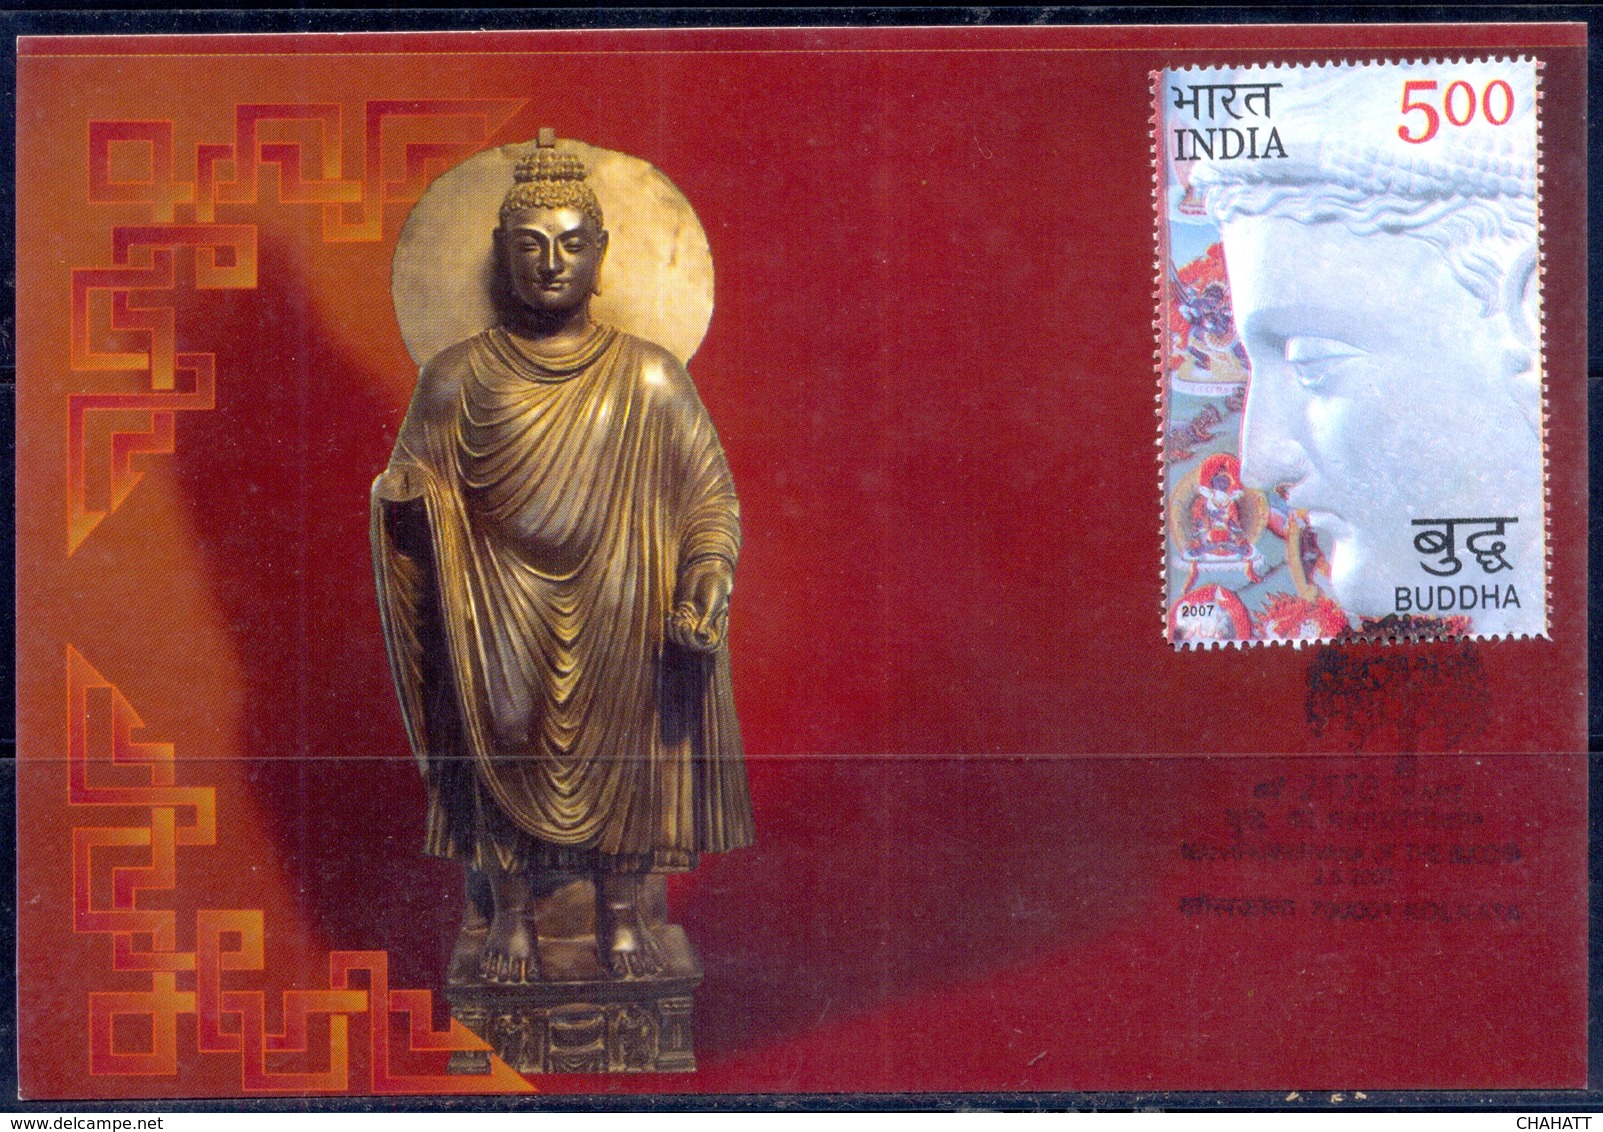 RELIGIONS-BUDDHISM- 2550 YEARS OF MAHAPARINIRVANA -MAXIMUM CARD #5- INDIA-2007- MC-64 - Buddismo